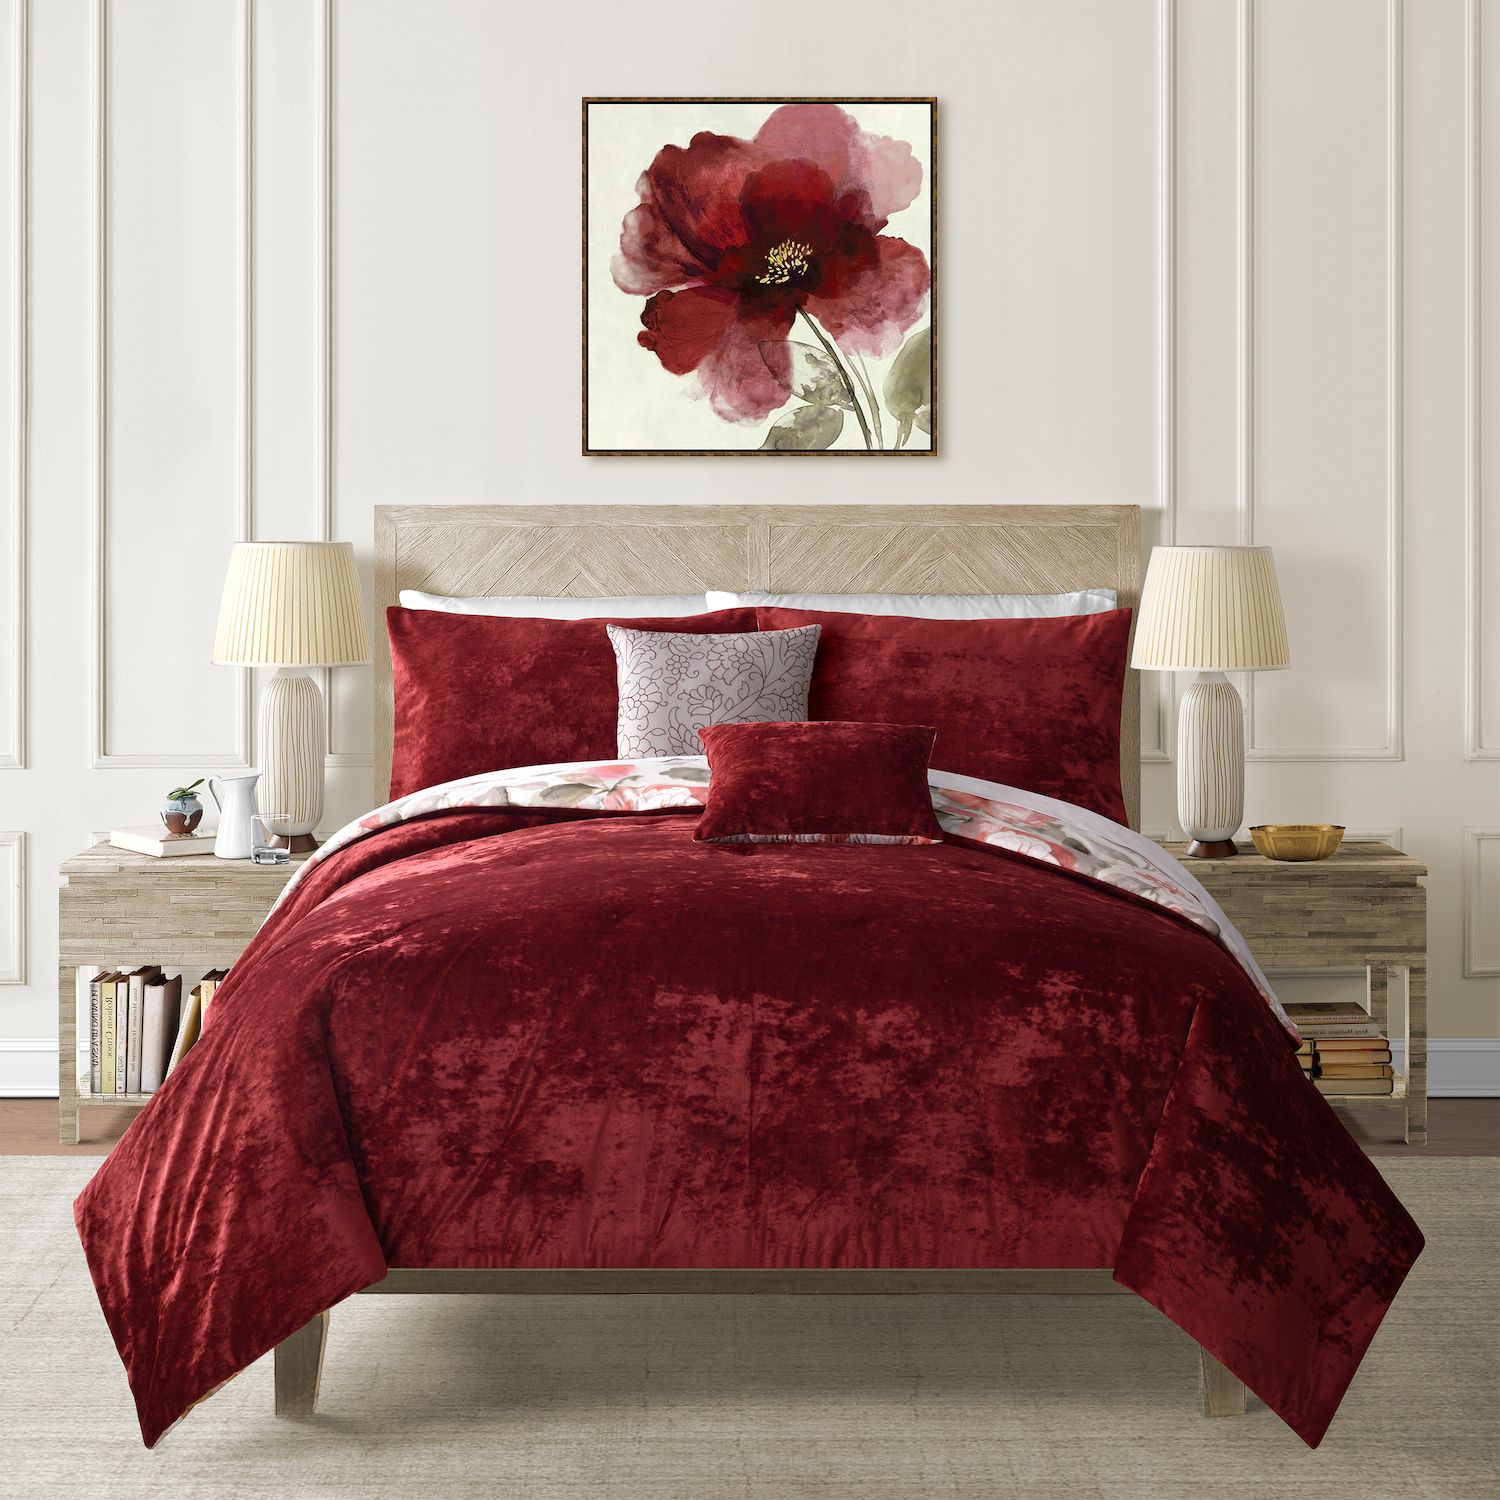 Image for Lanwood Magnolia Comforter Set with Shams at Kohl's.